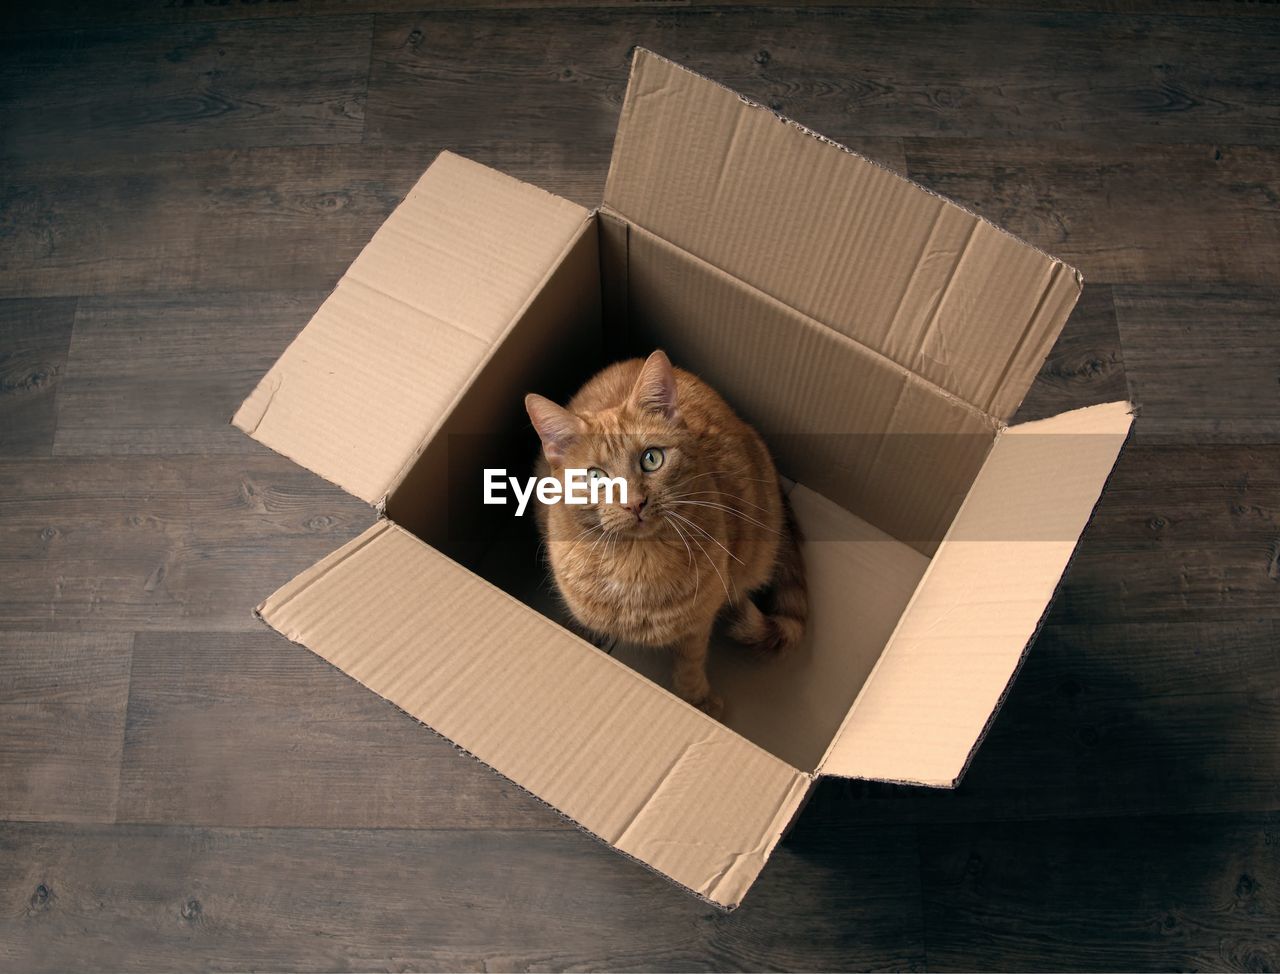 High angle portrait of cat in cardboard box on hardwood floor